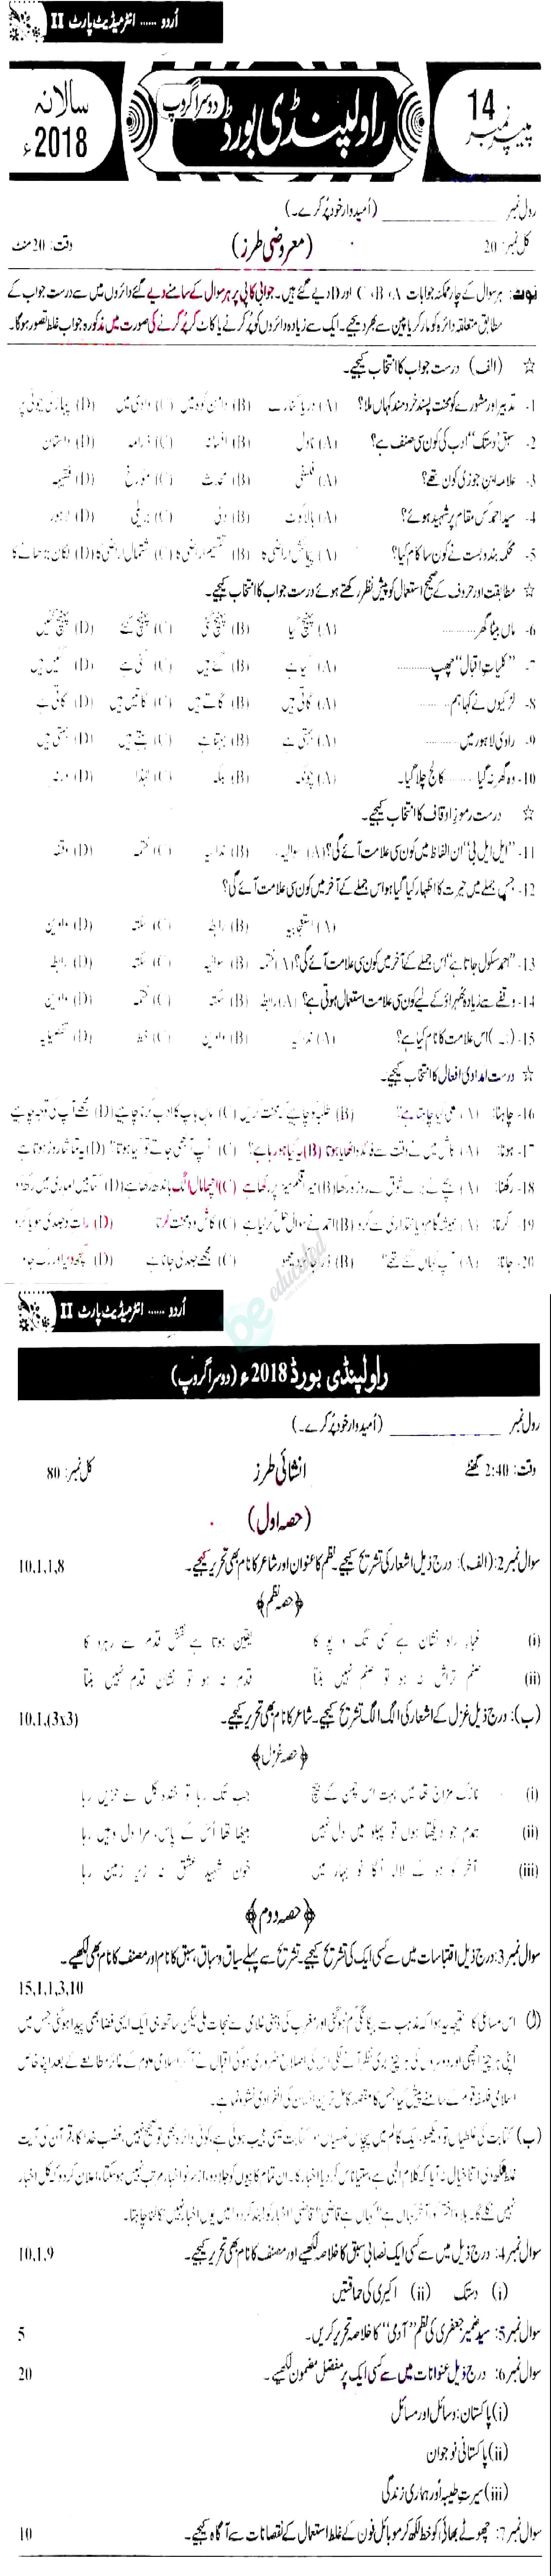 Urdu 12th class Past Paper Group 2 BISE Rawalpindi 2018